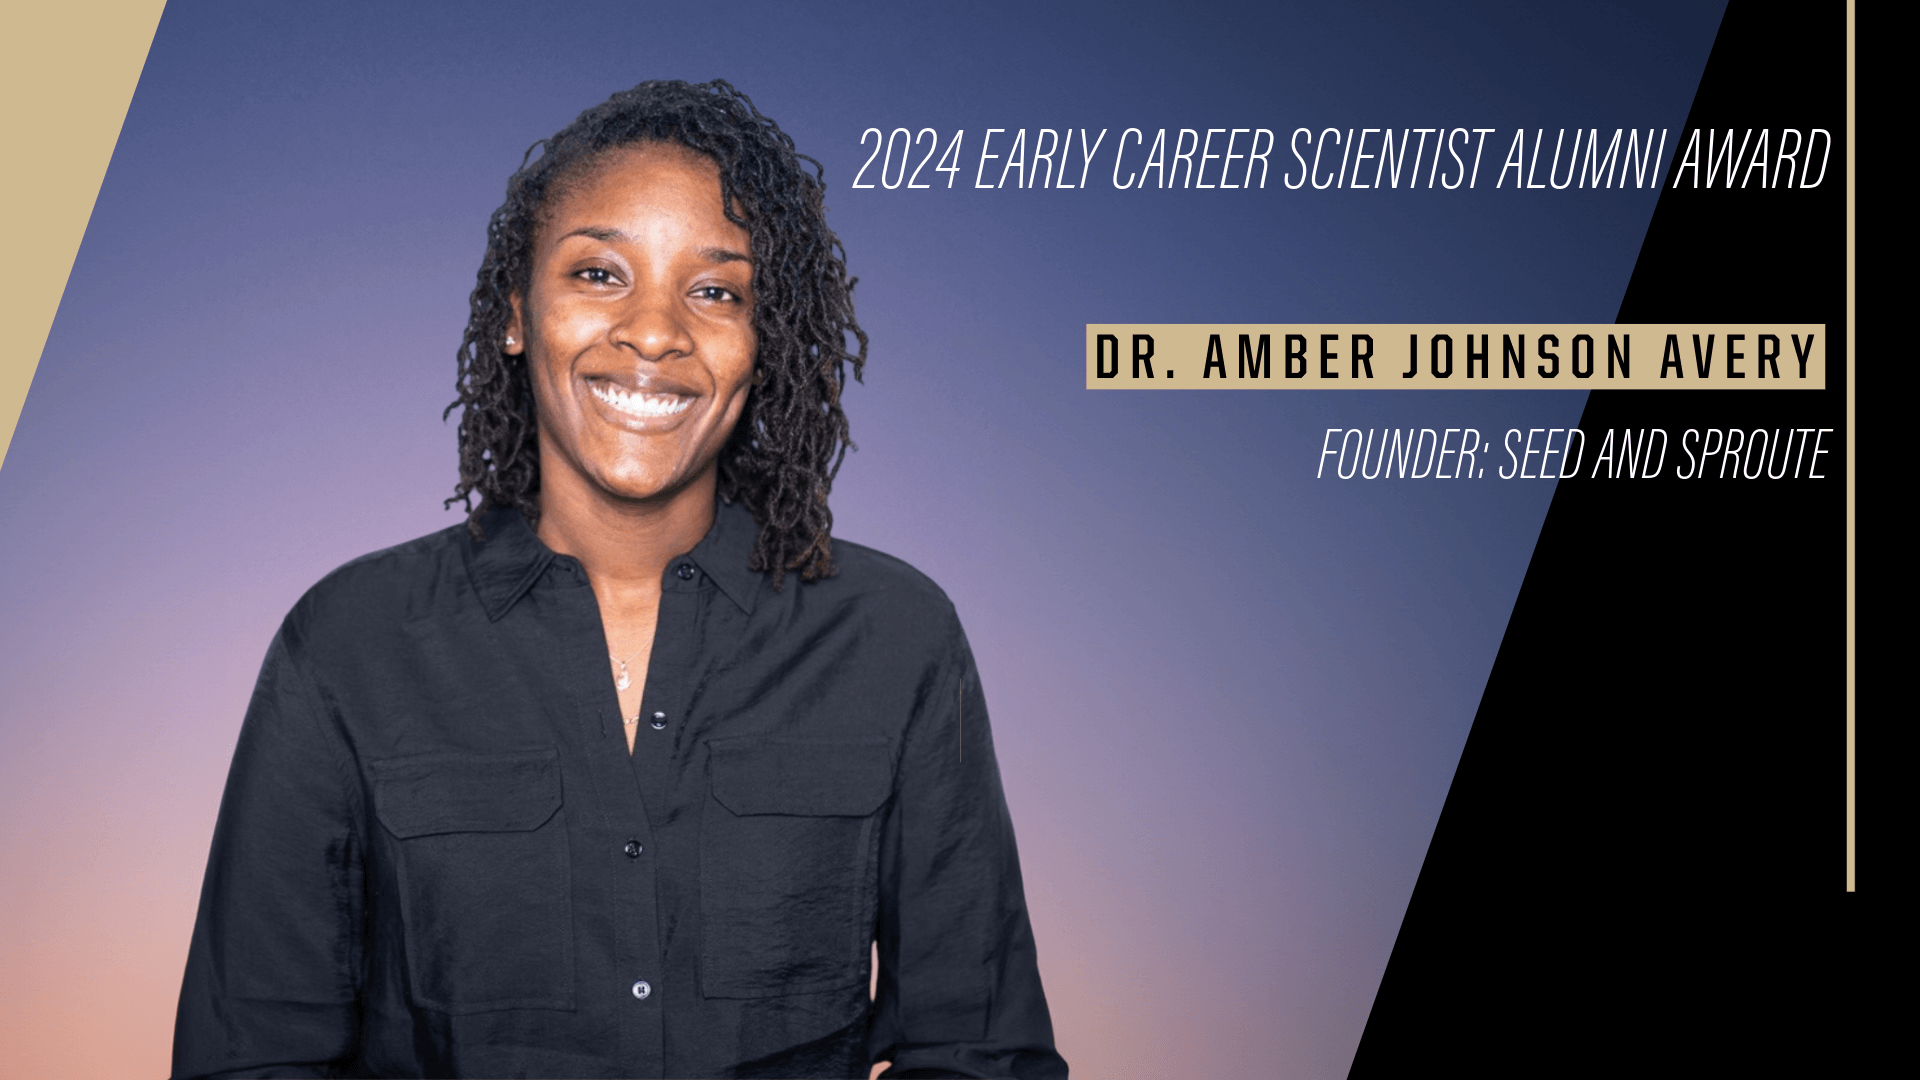 Dr. Amber Johnson Avery